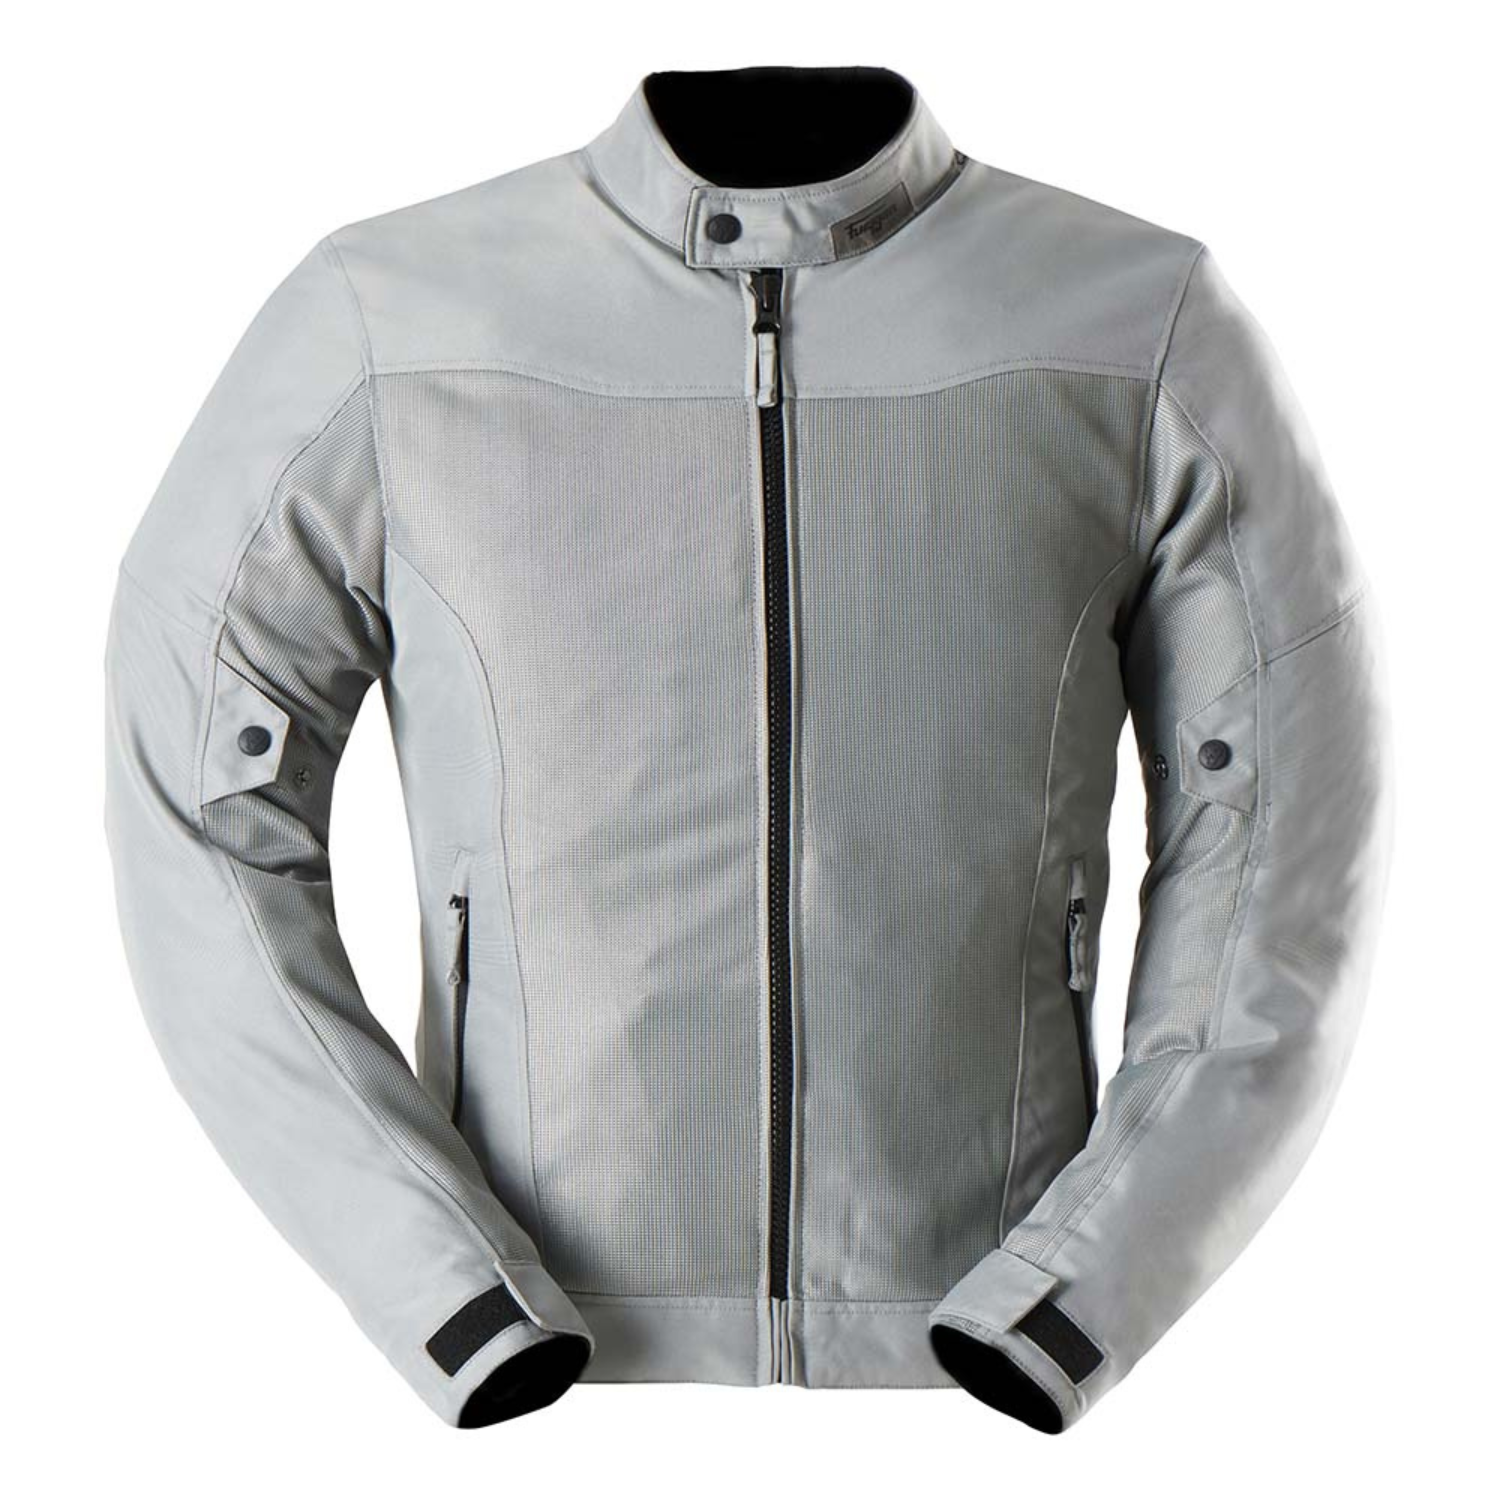 Image of Furygan Mistral Evo 3 Jacket Grey Size L ID 3435980362676